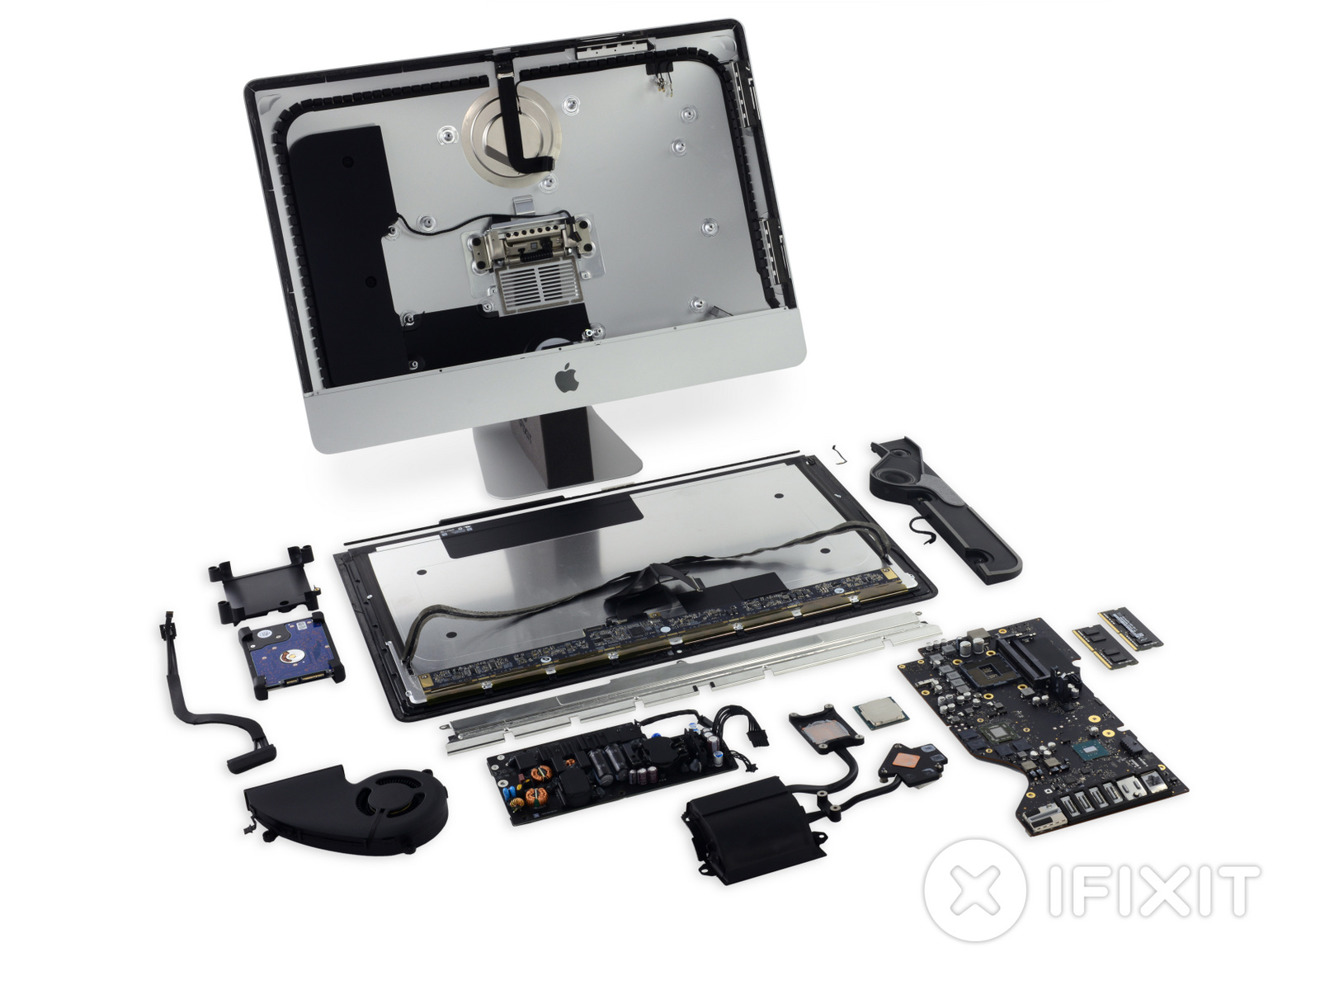 Teardown of the 2017 21.5-inch iMac, via iFixit